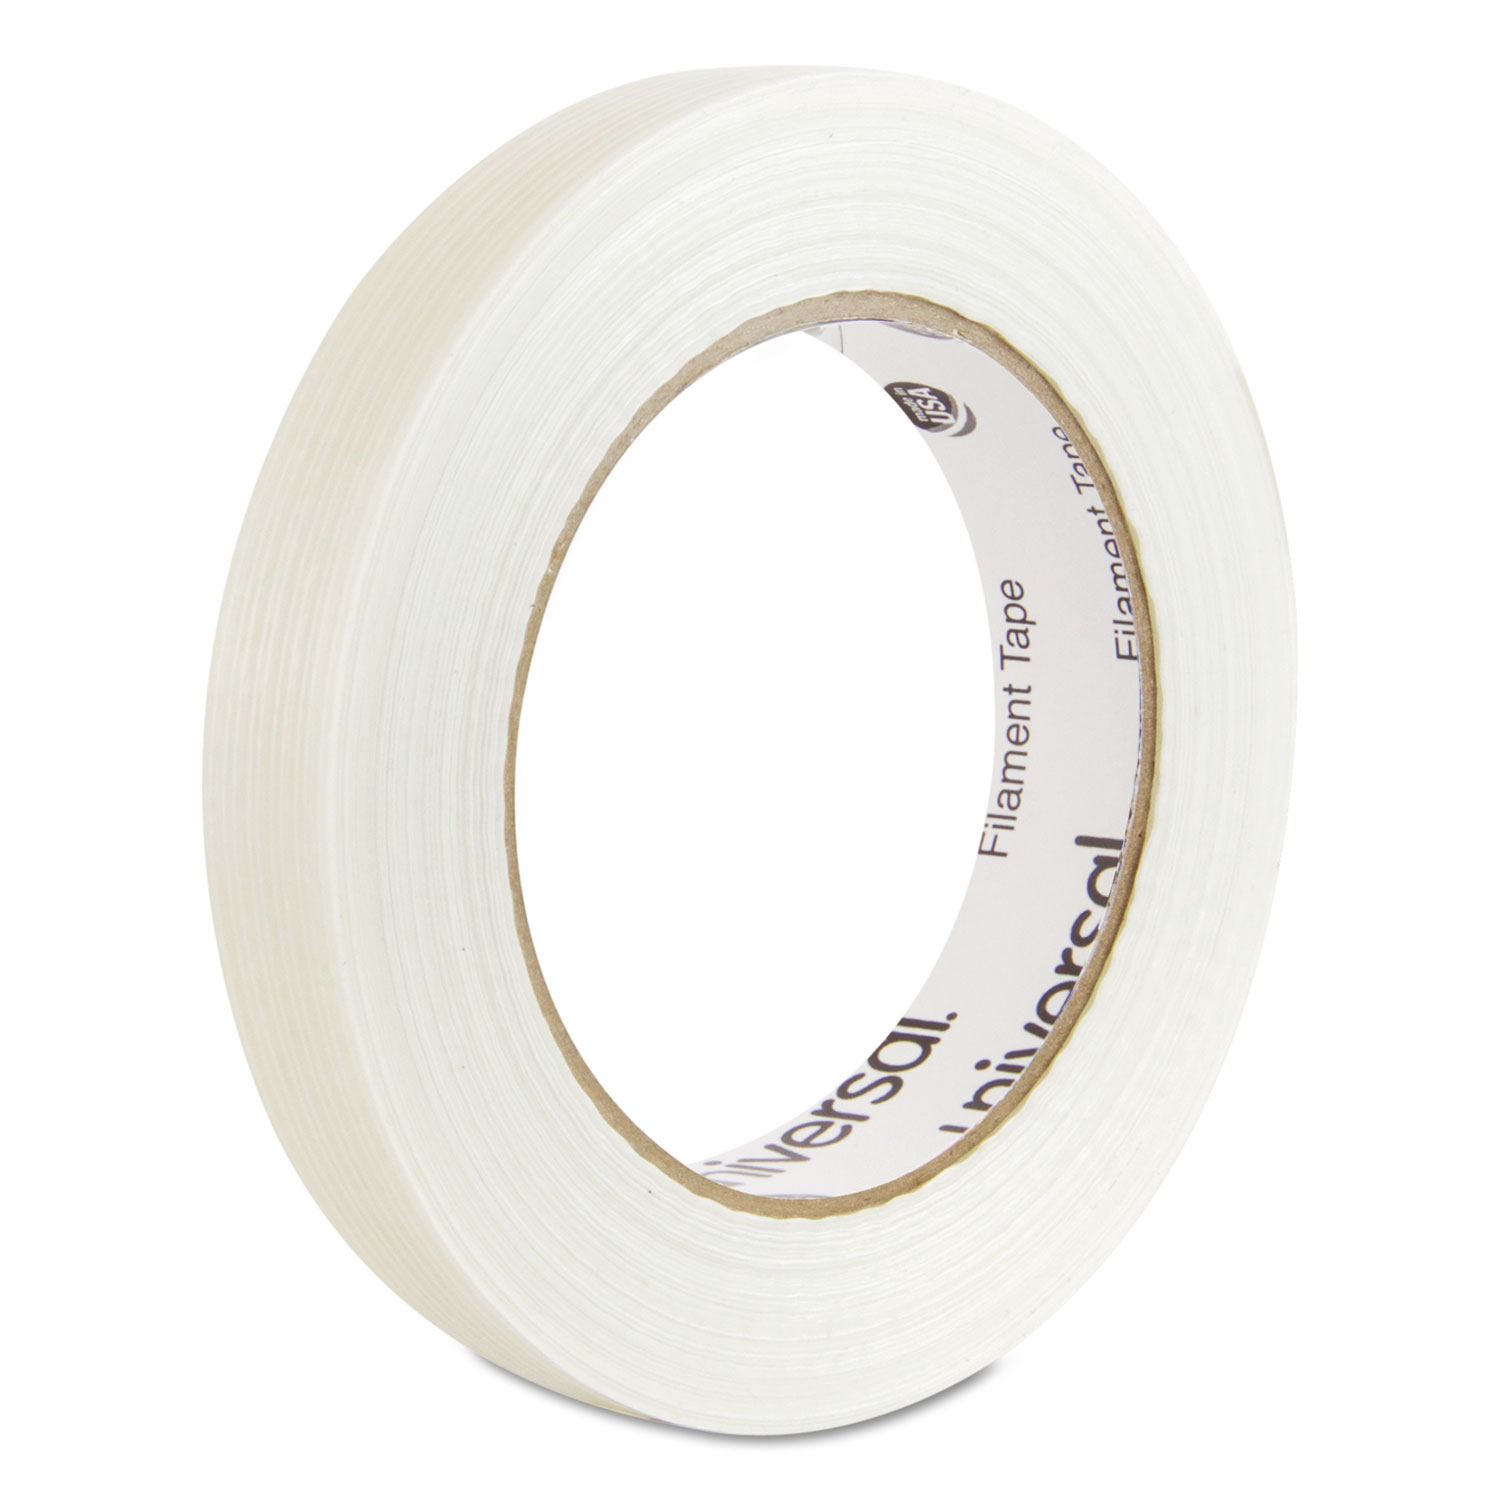 120# Utility Grade Filament Tape, 3" Core, 18 mm x 54.8 m, Clear